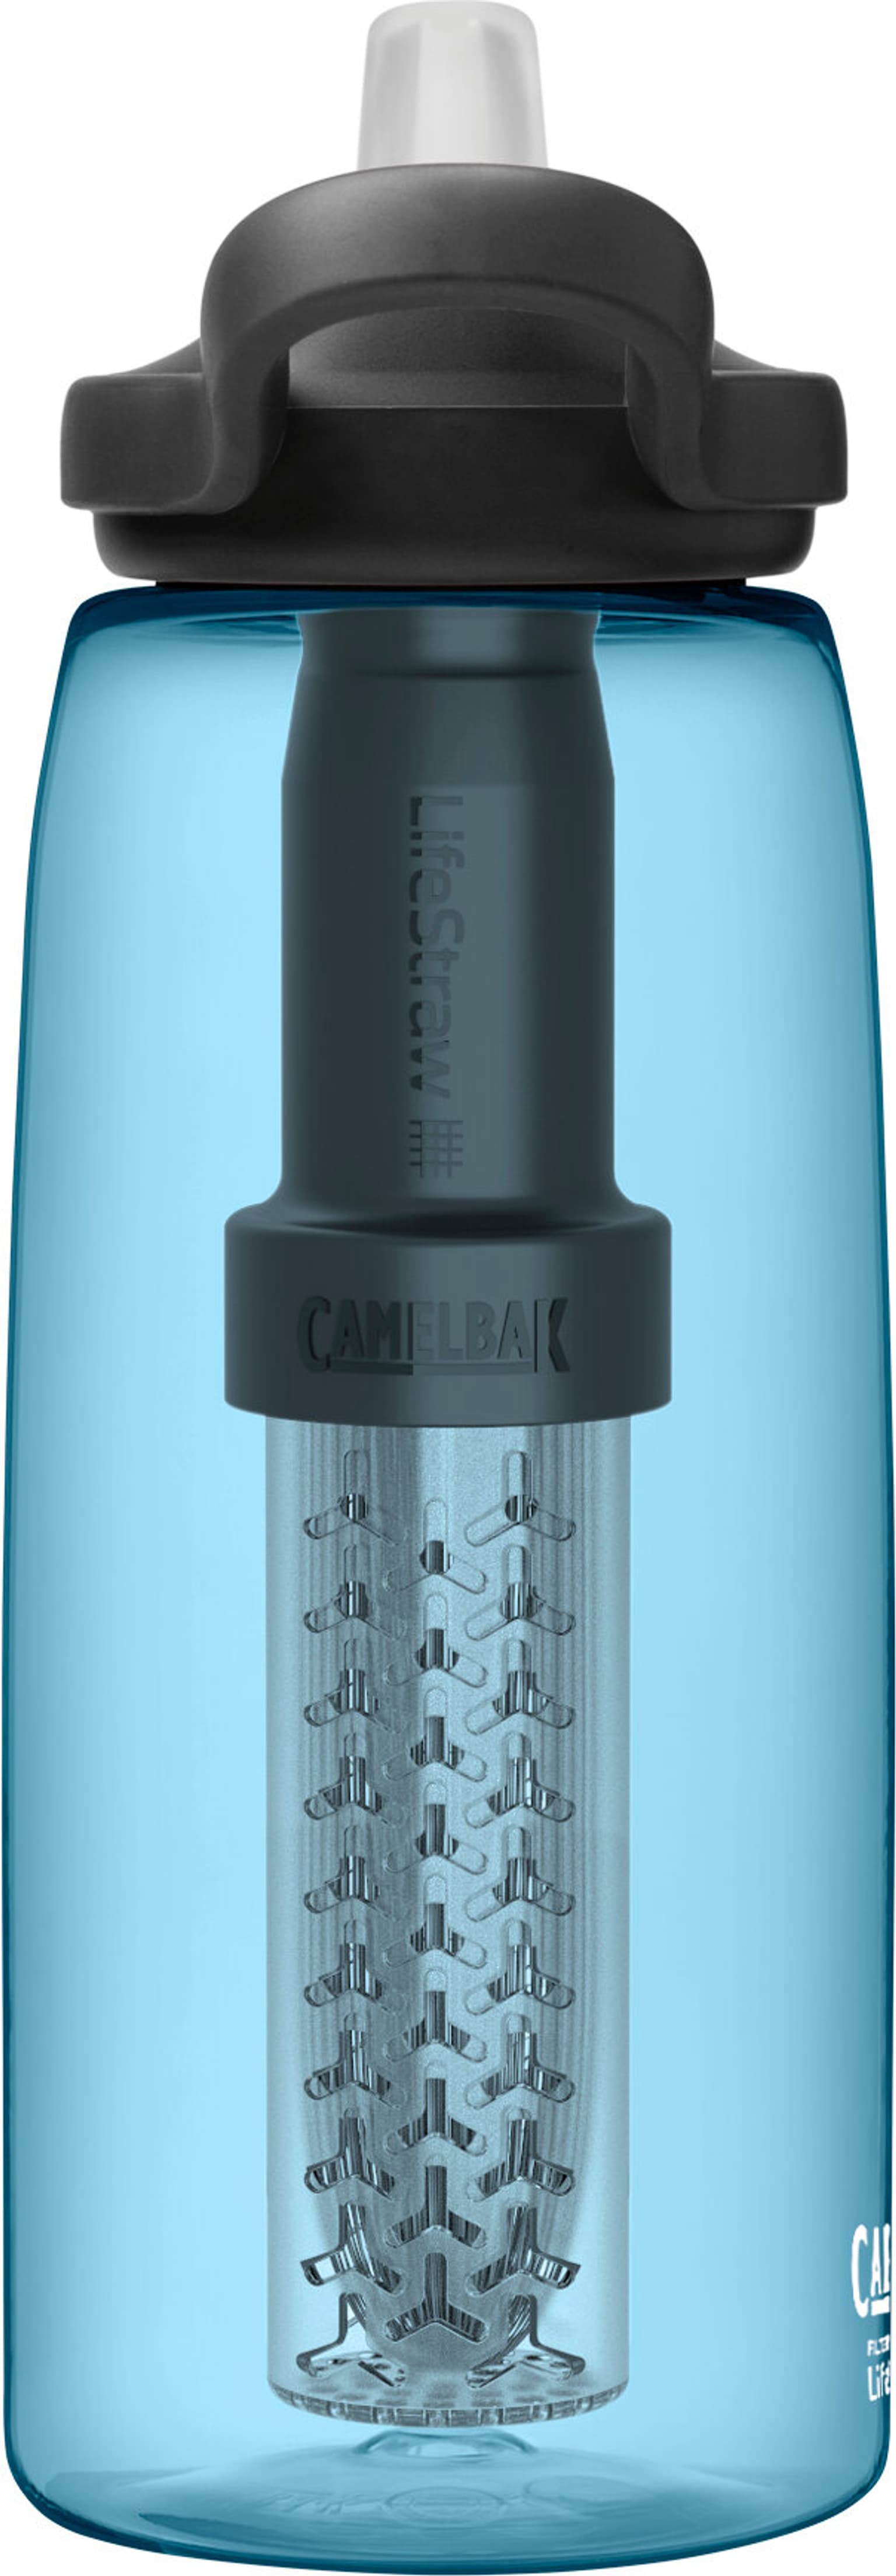 Camelbak Camelbak Eddy+ Bottle Lifestraw 1.0l Wasserfilter blau 4